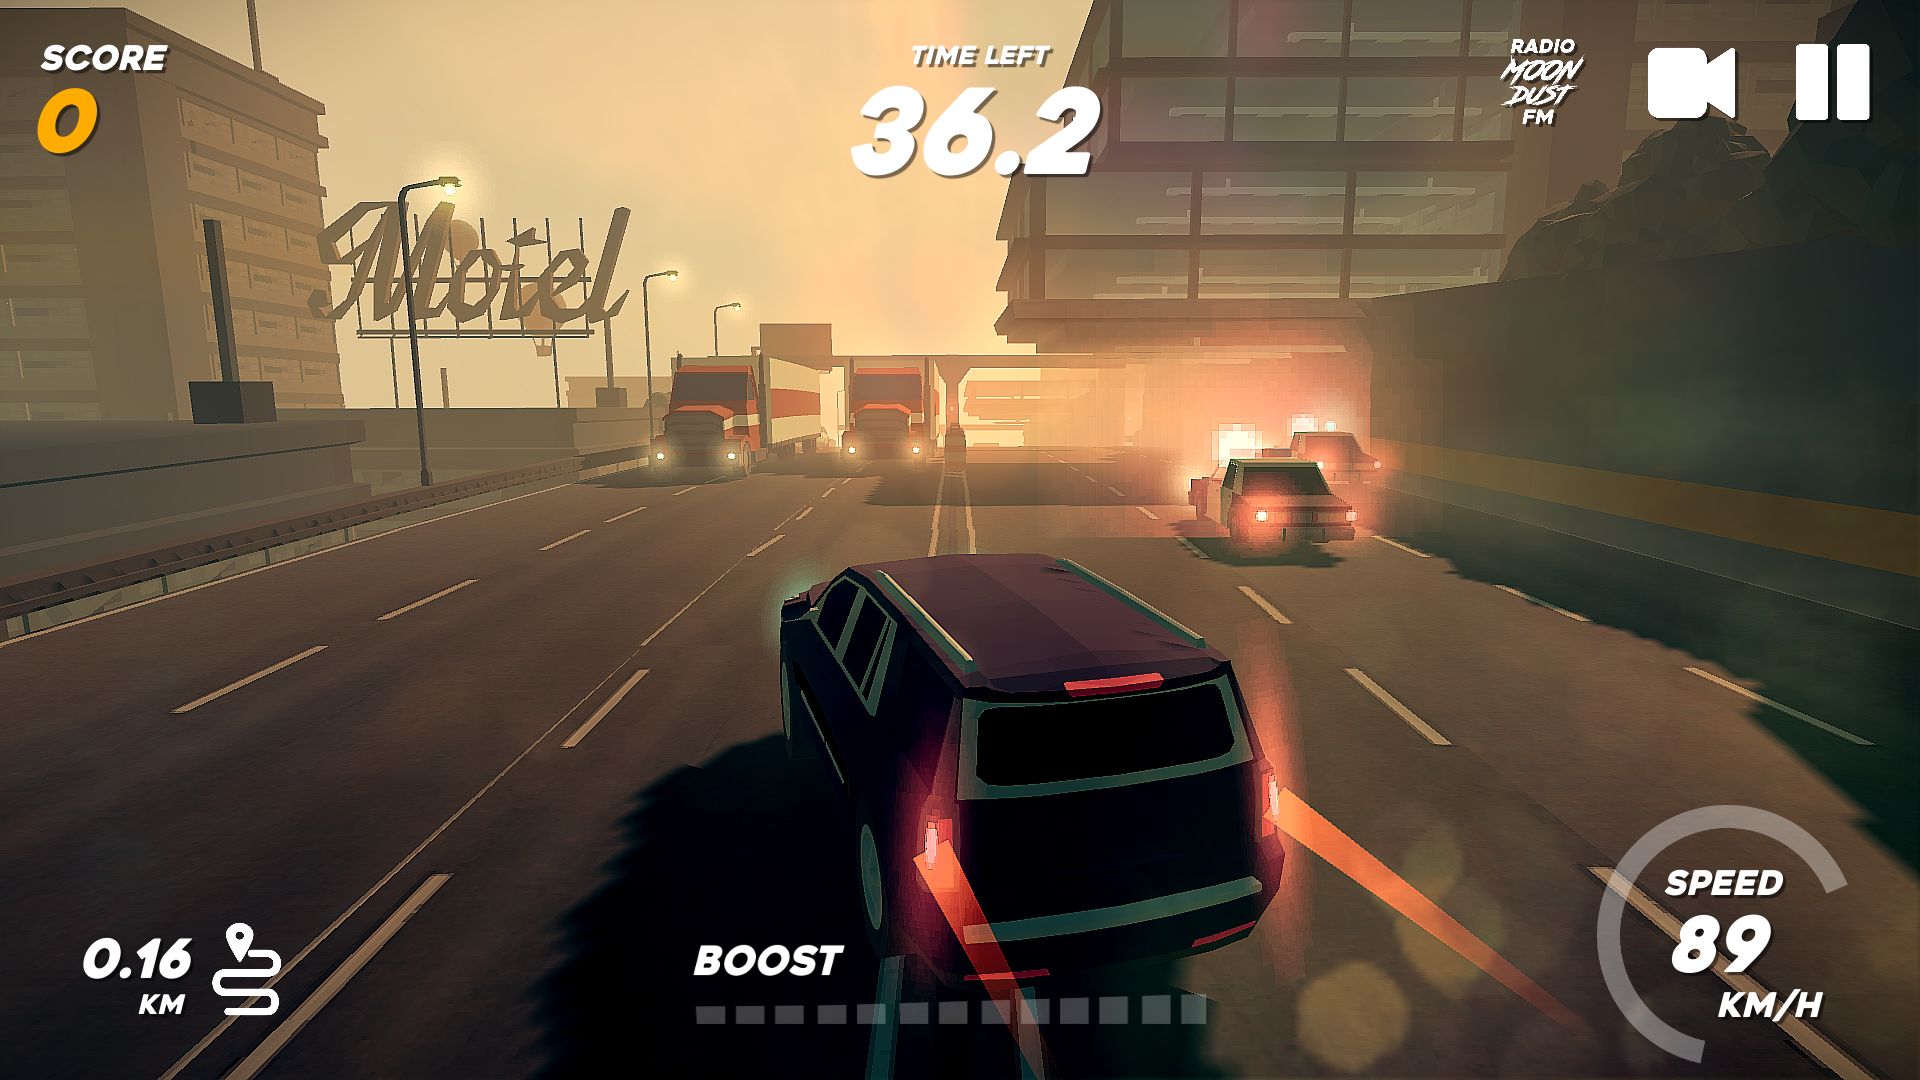 Pako Highway - Android game screenshots.